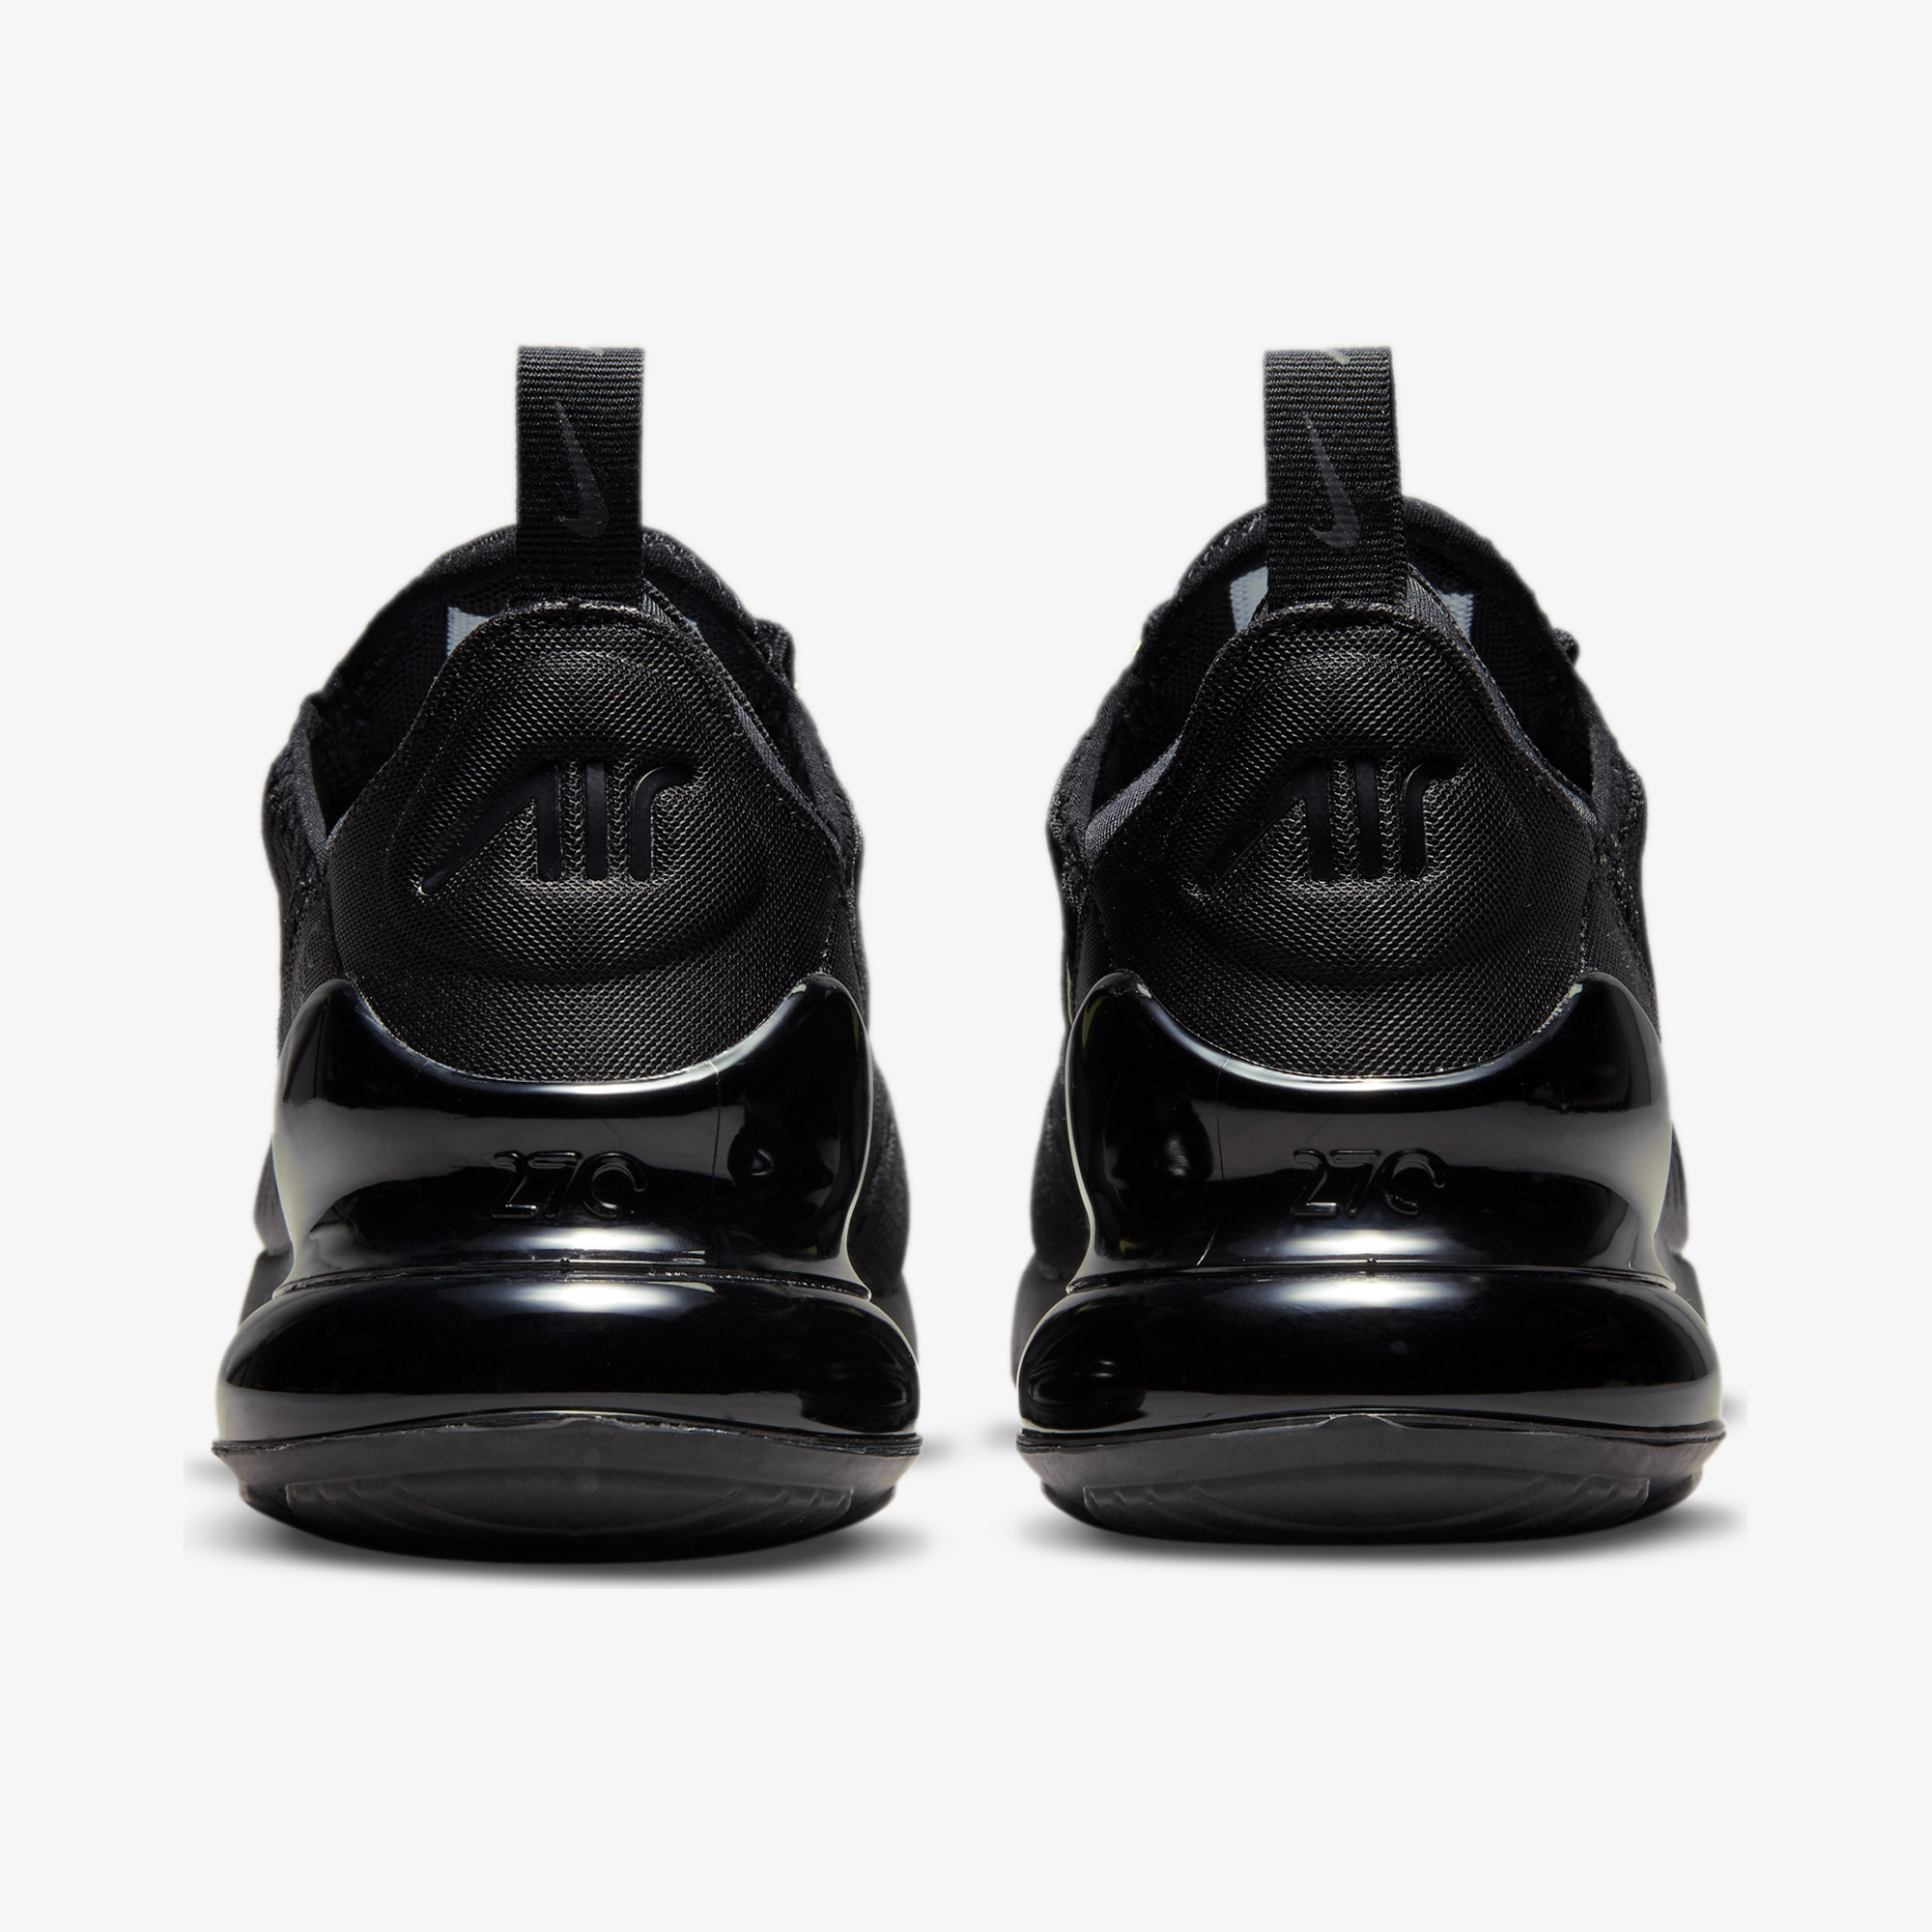 Nike Air Max 270 Gs Kadın Siyah Spor Ayakkabı